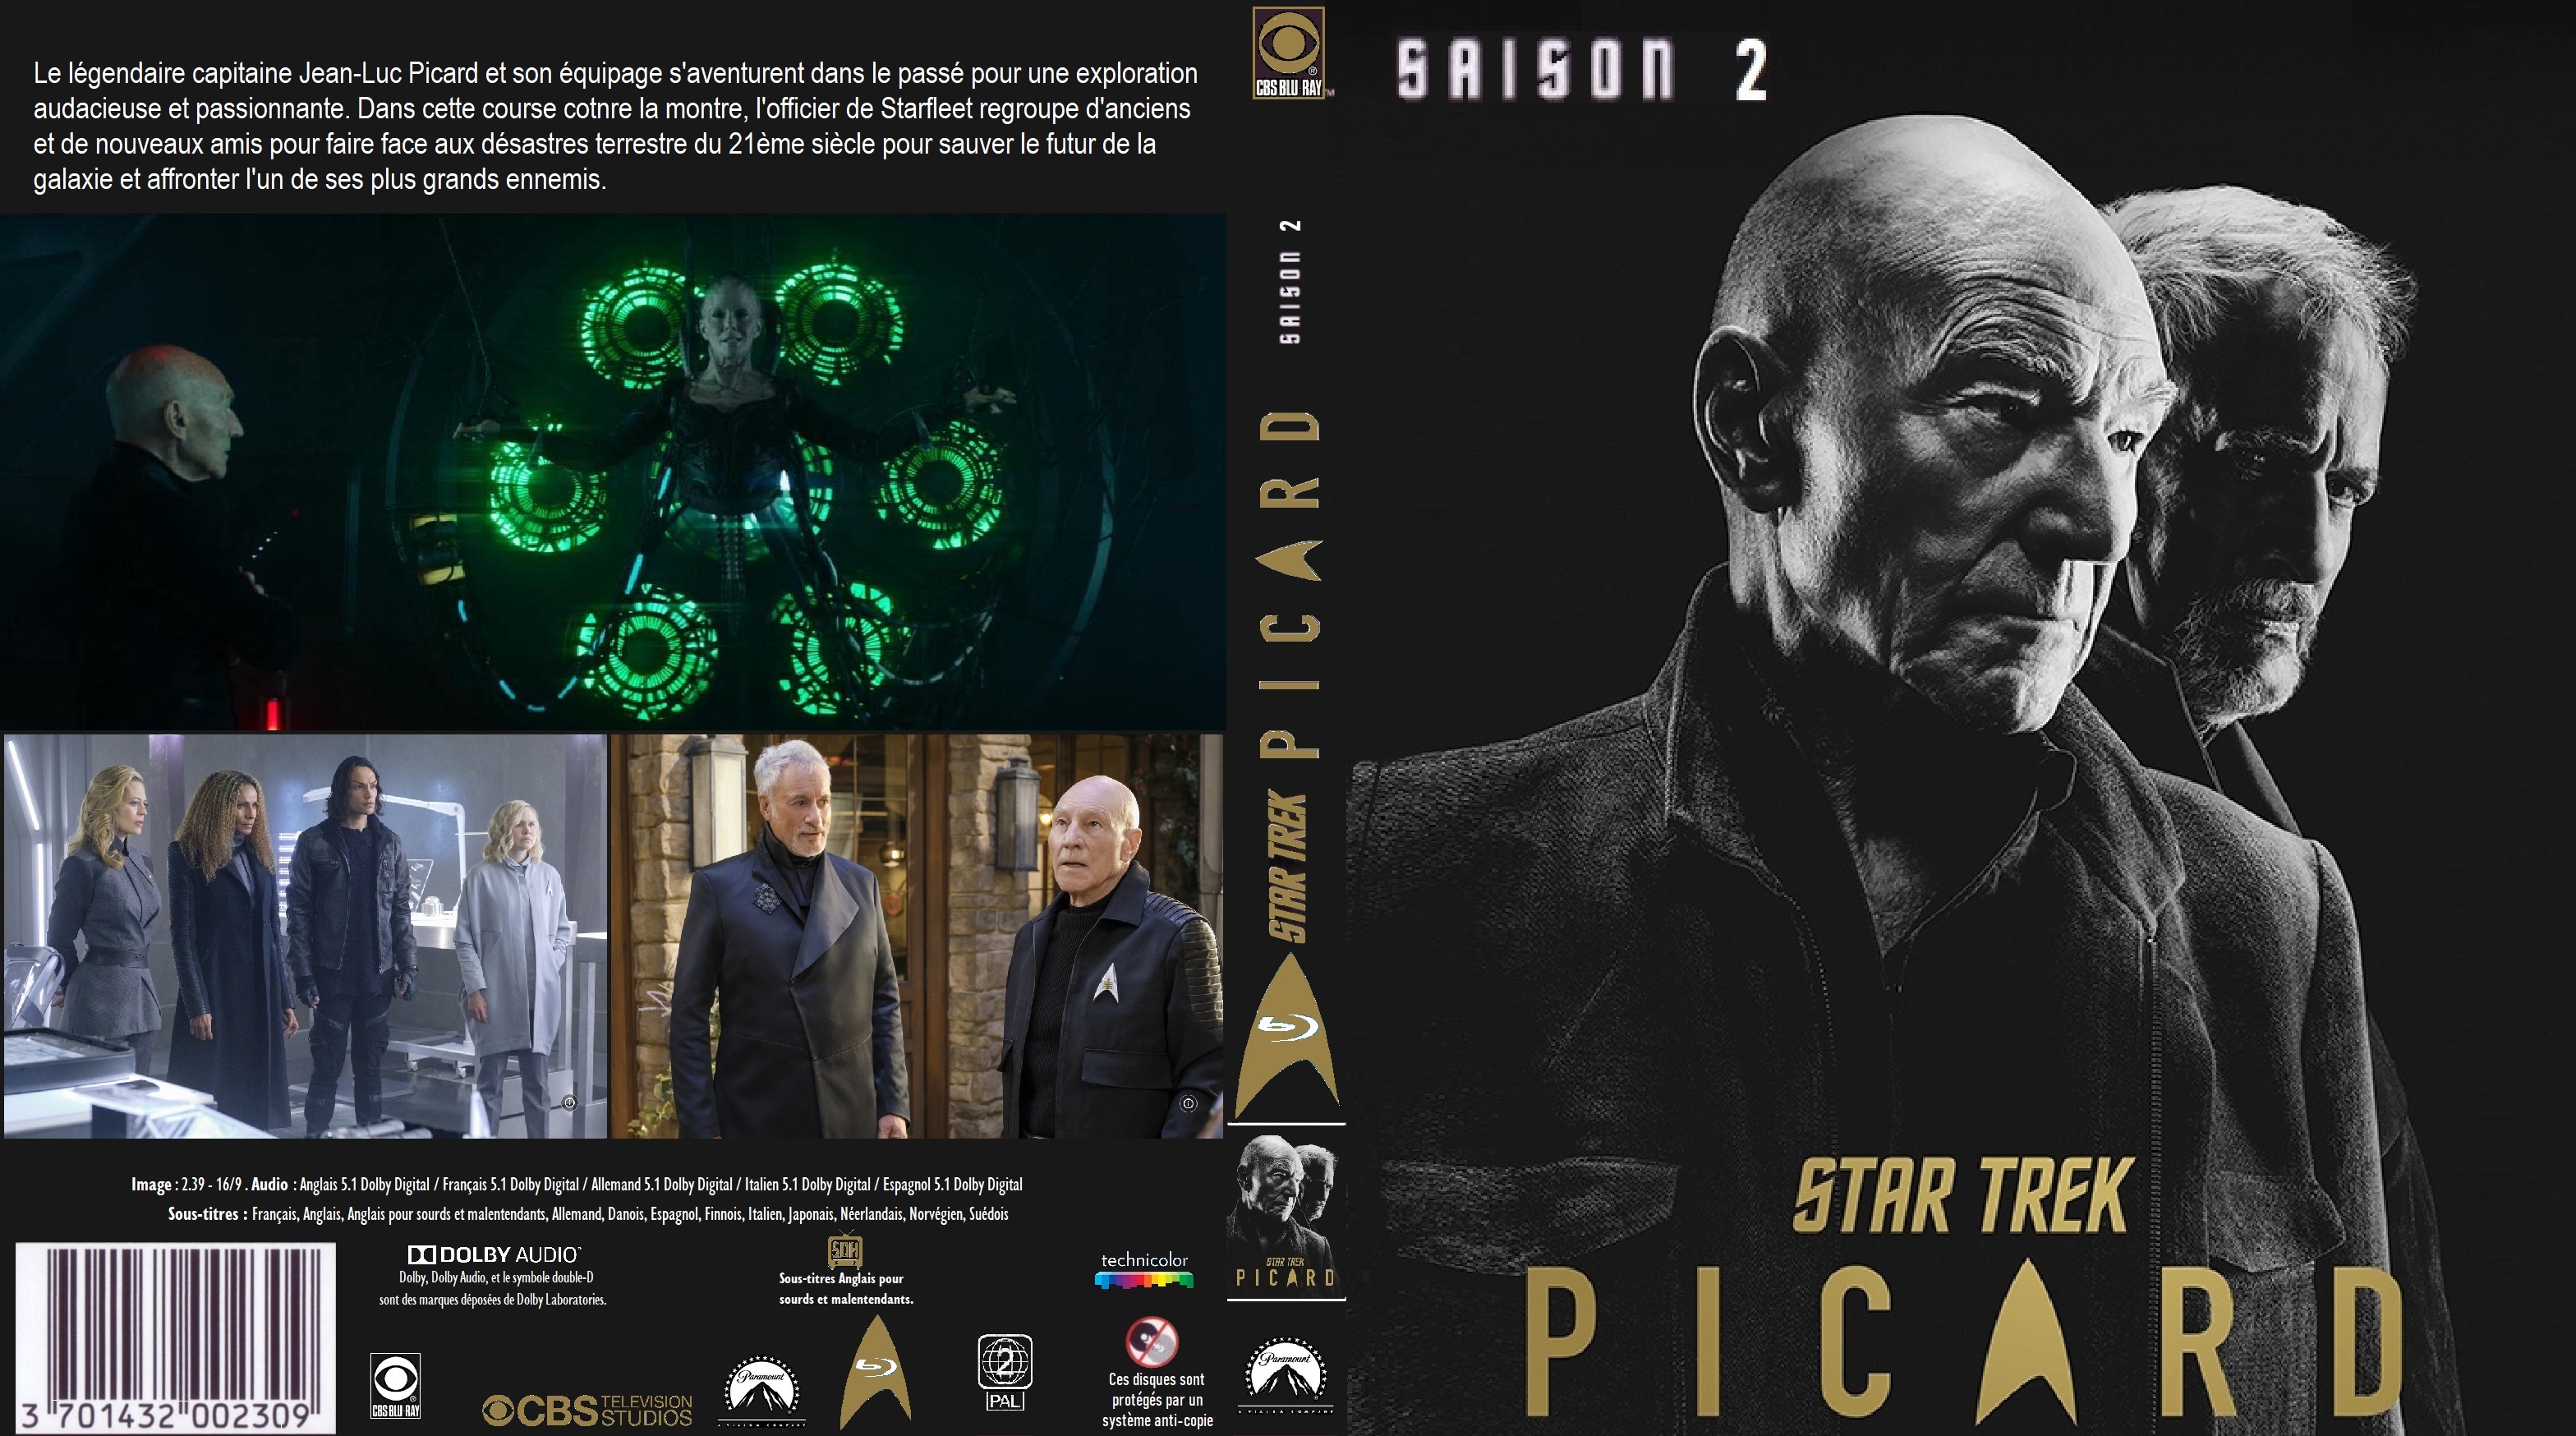 Jaquette DVD Star Trek Picard saison 2 custom (BLU-RAY)